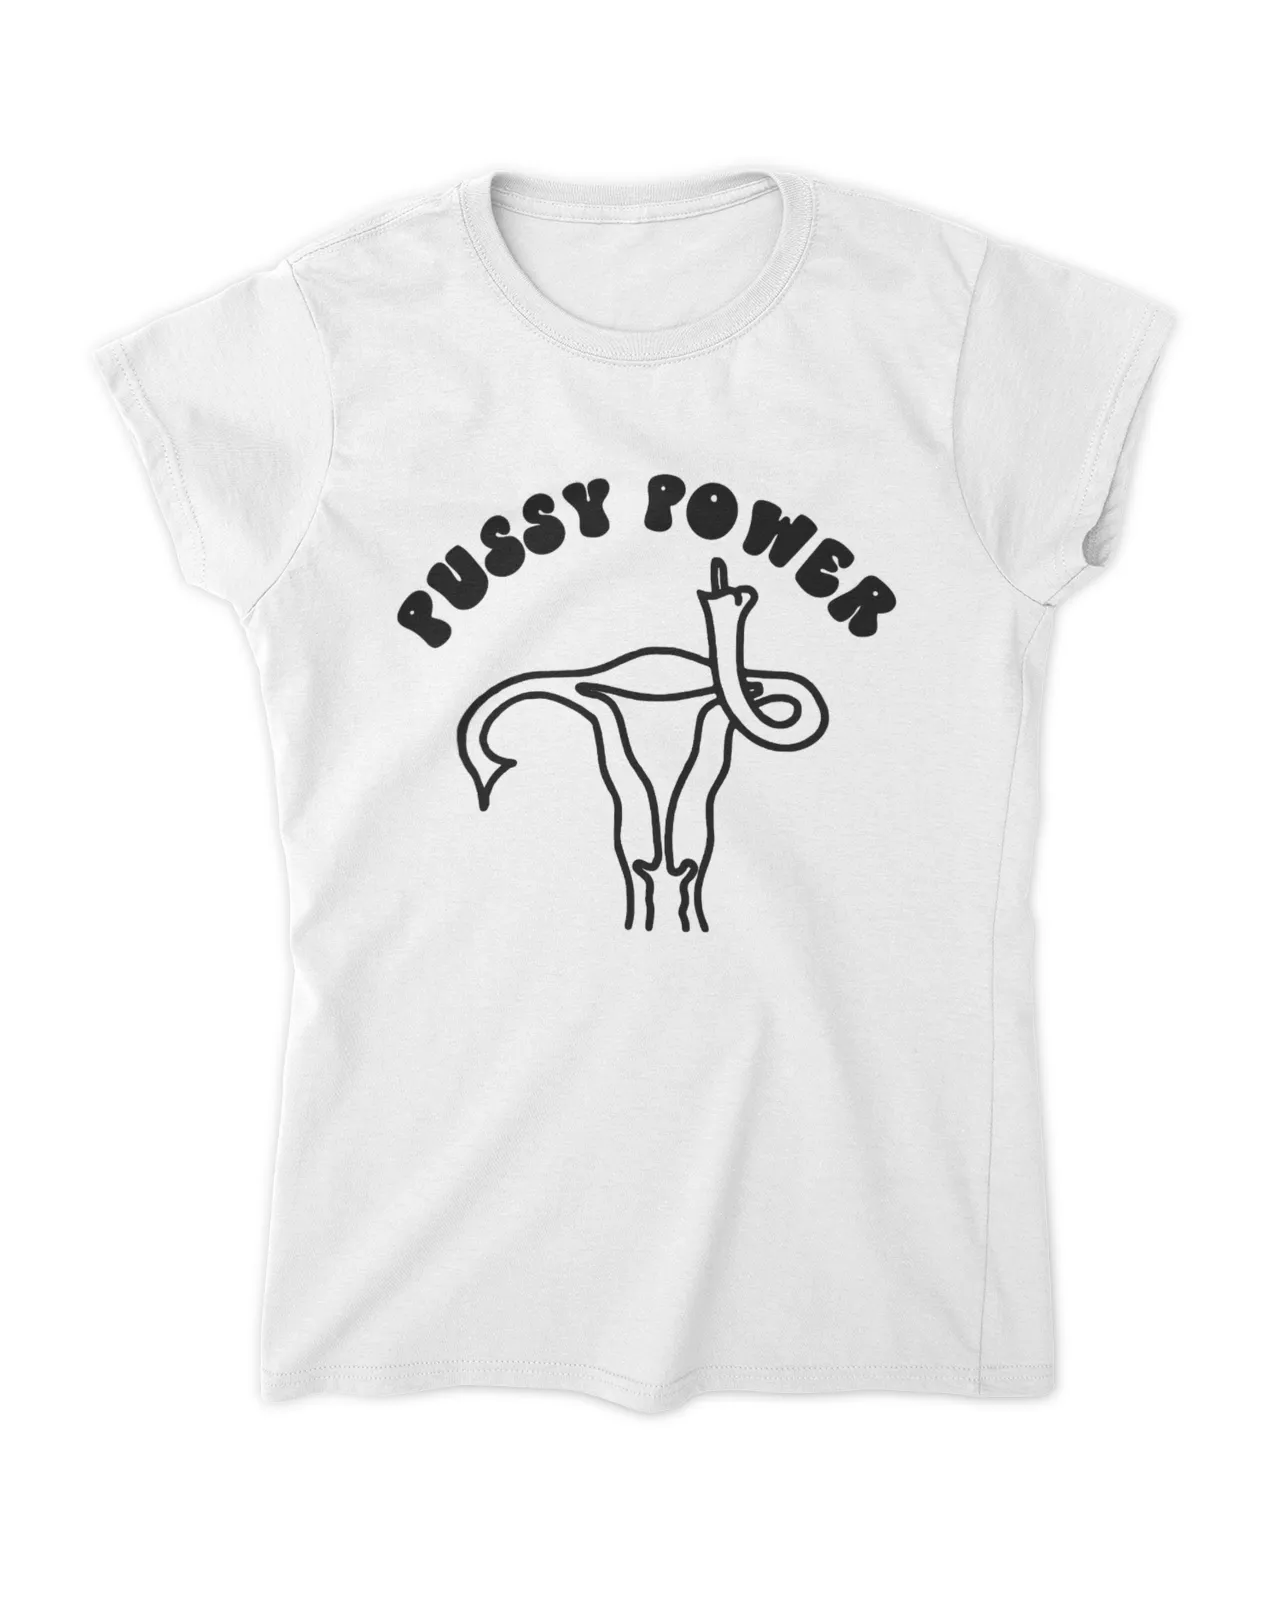 Pussy Power Shirt